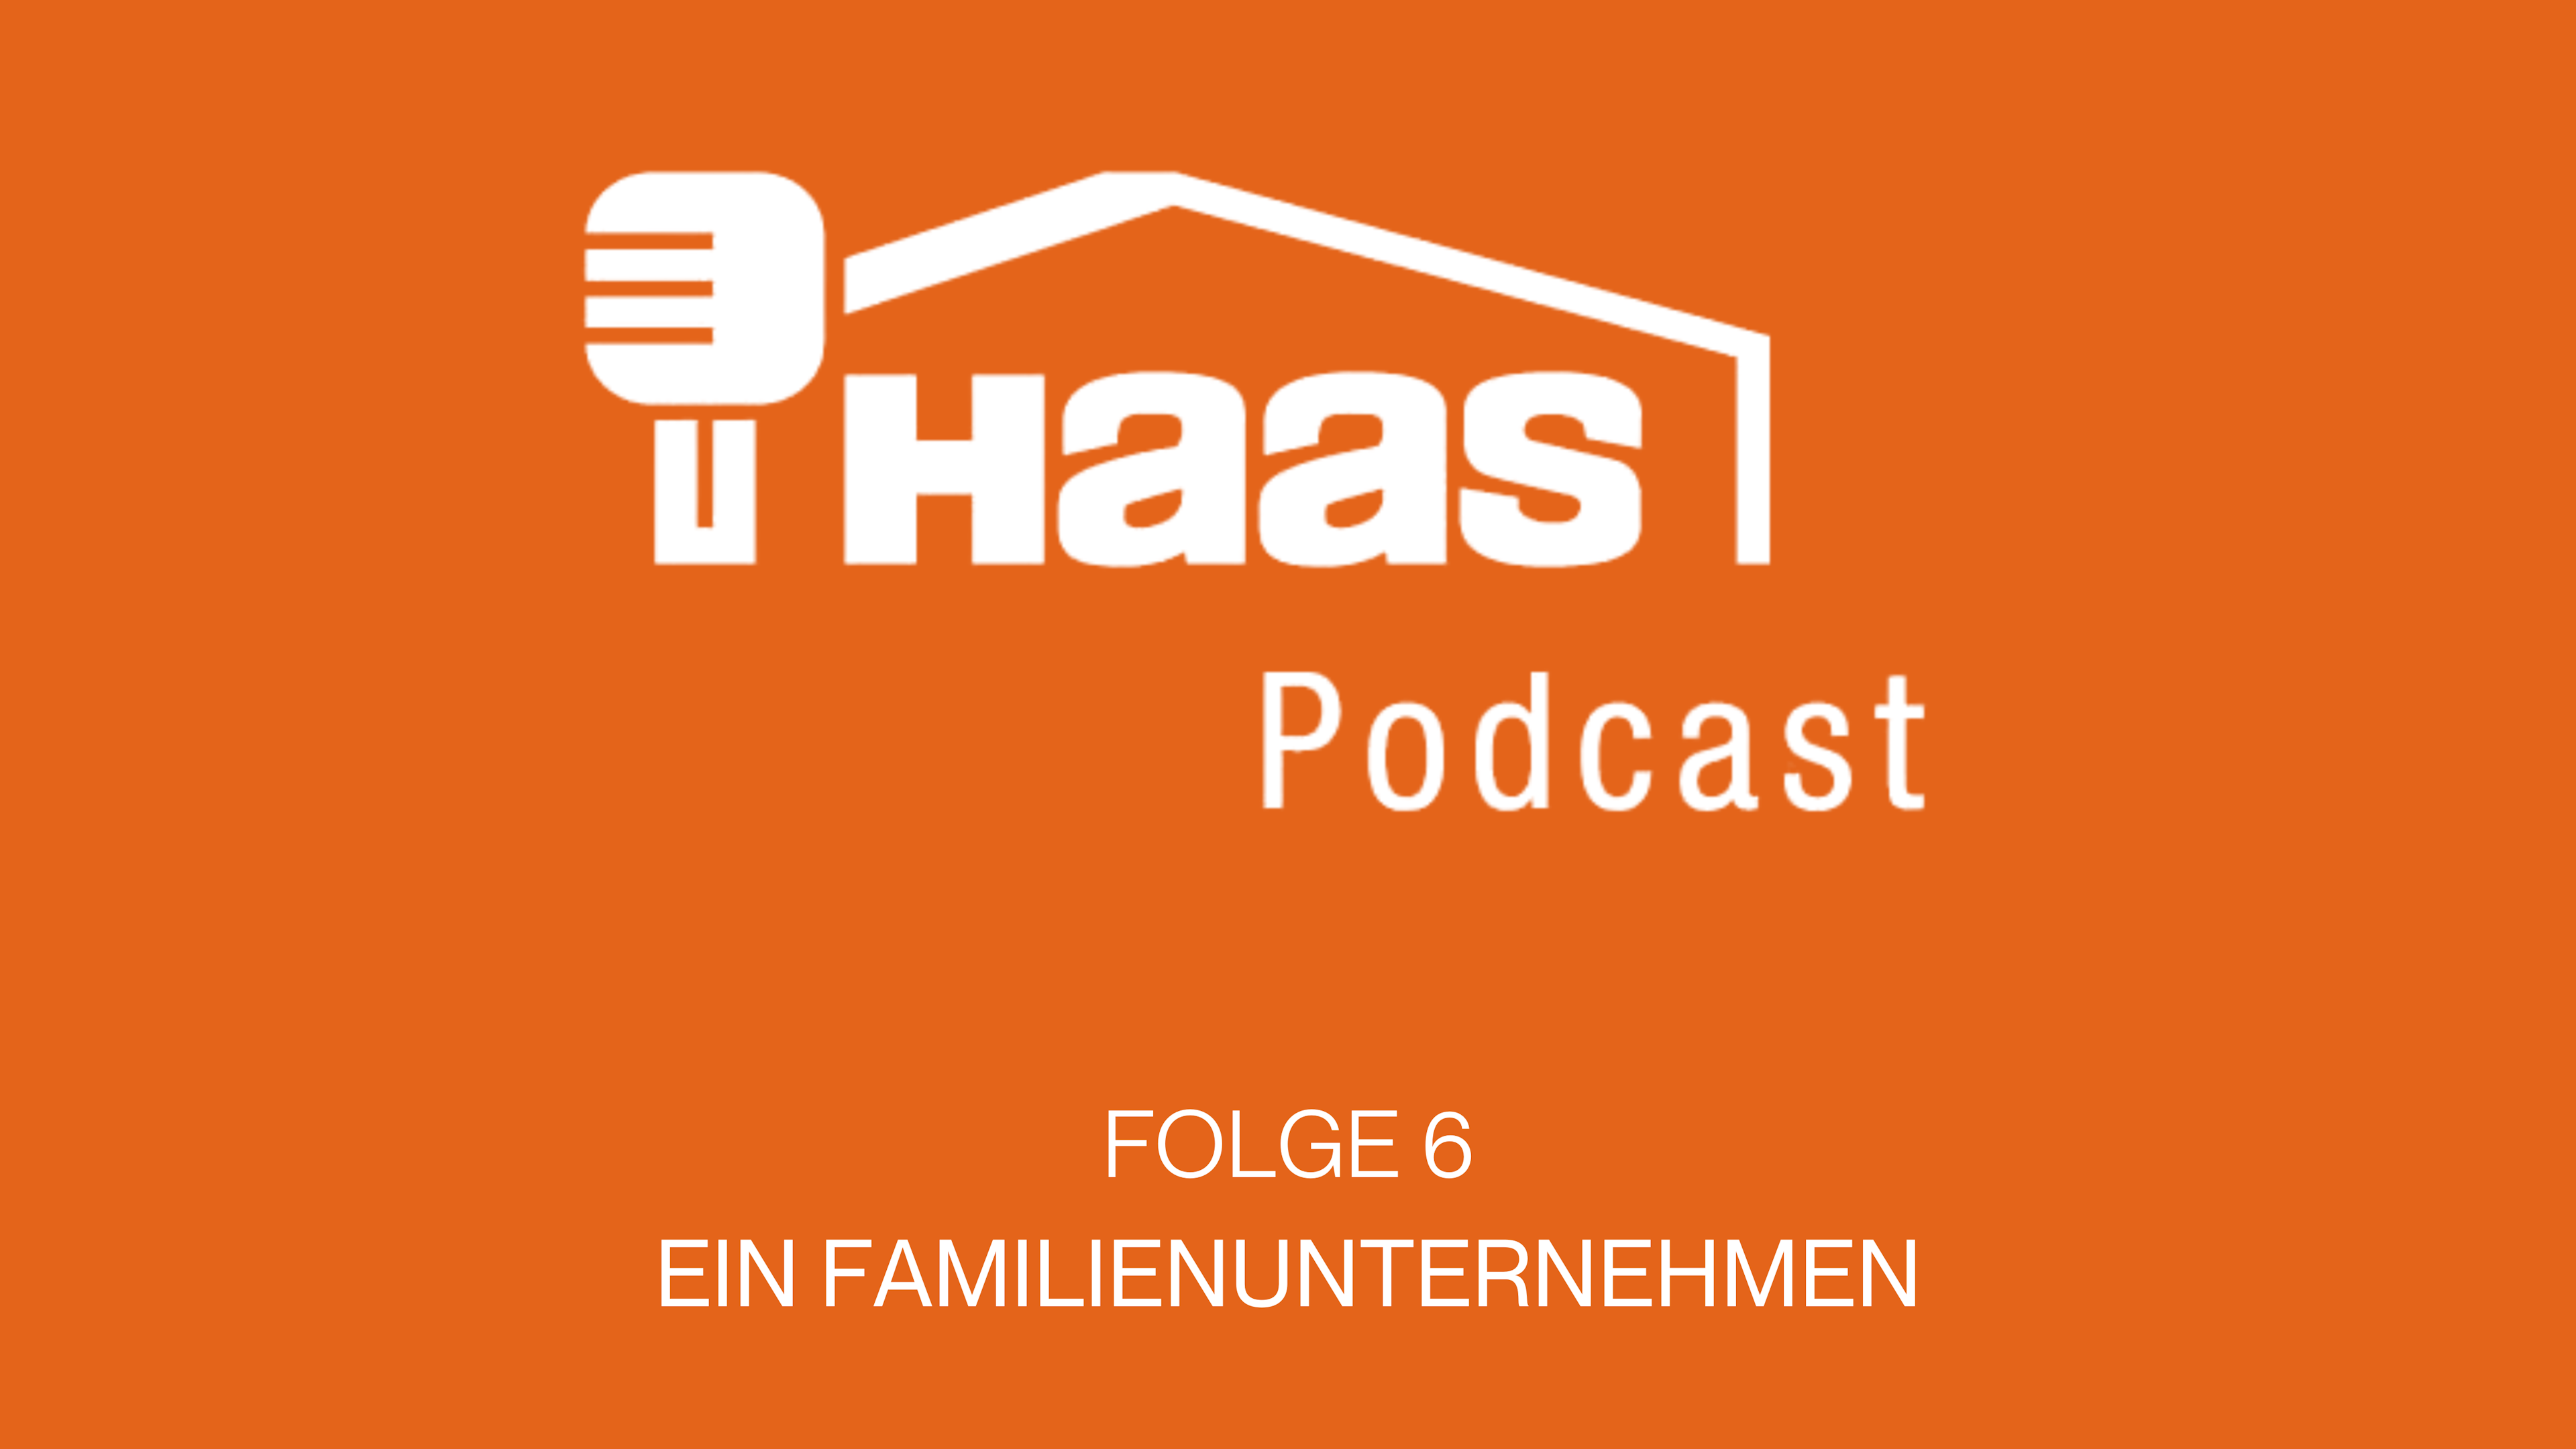 Haas Fertigbau Podcast aus einem Holz geschnitzt Folge 6